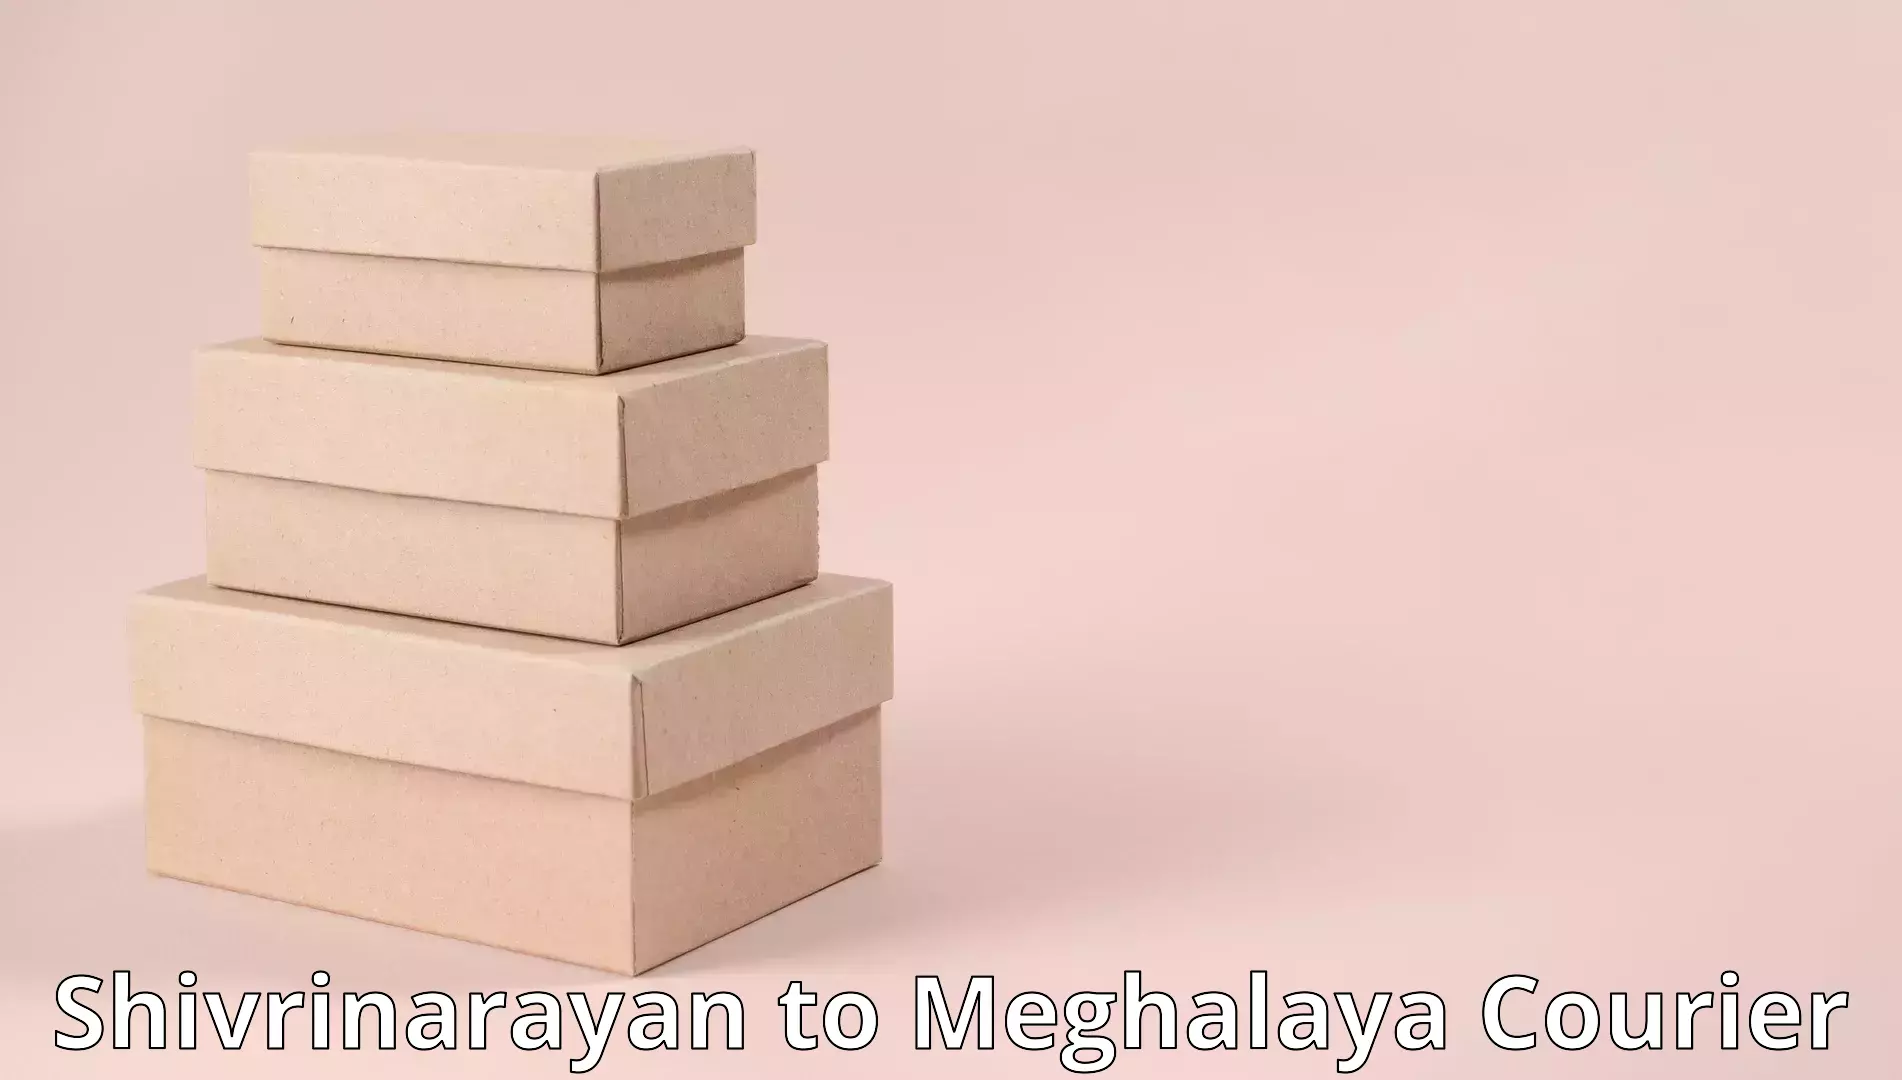 Cost-effective moving options Shivrinarayan to Meghalaya